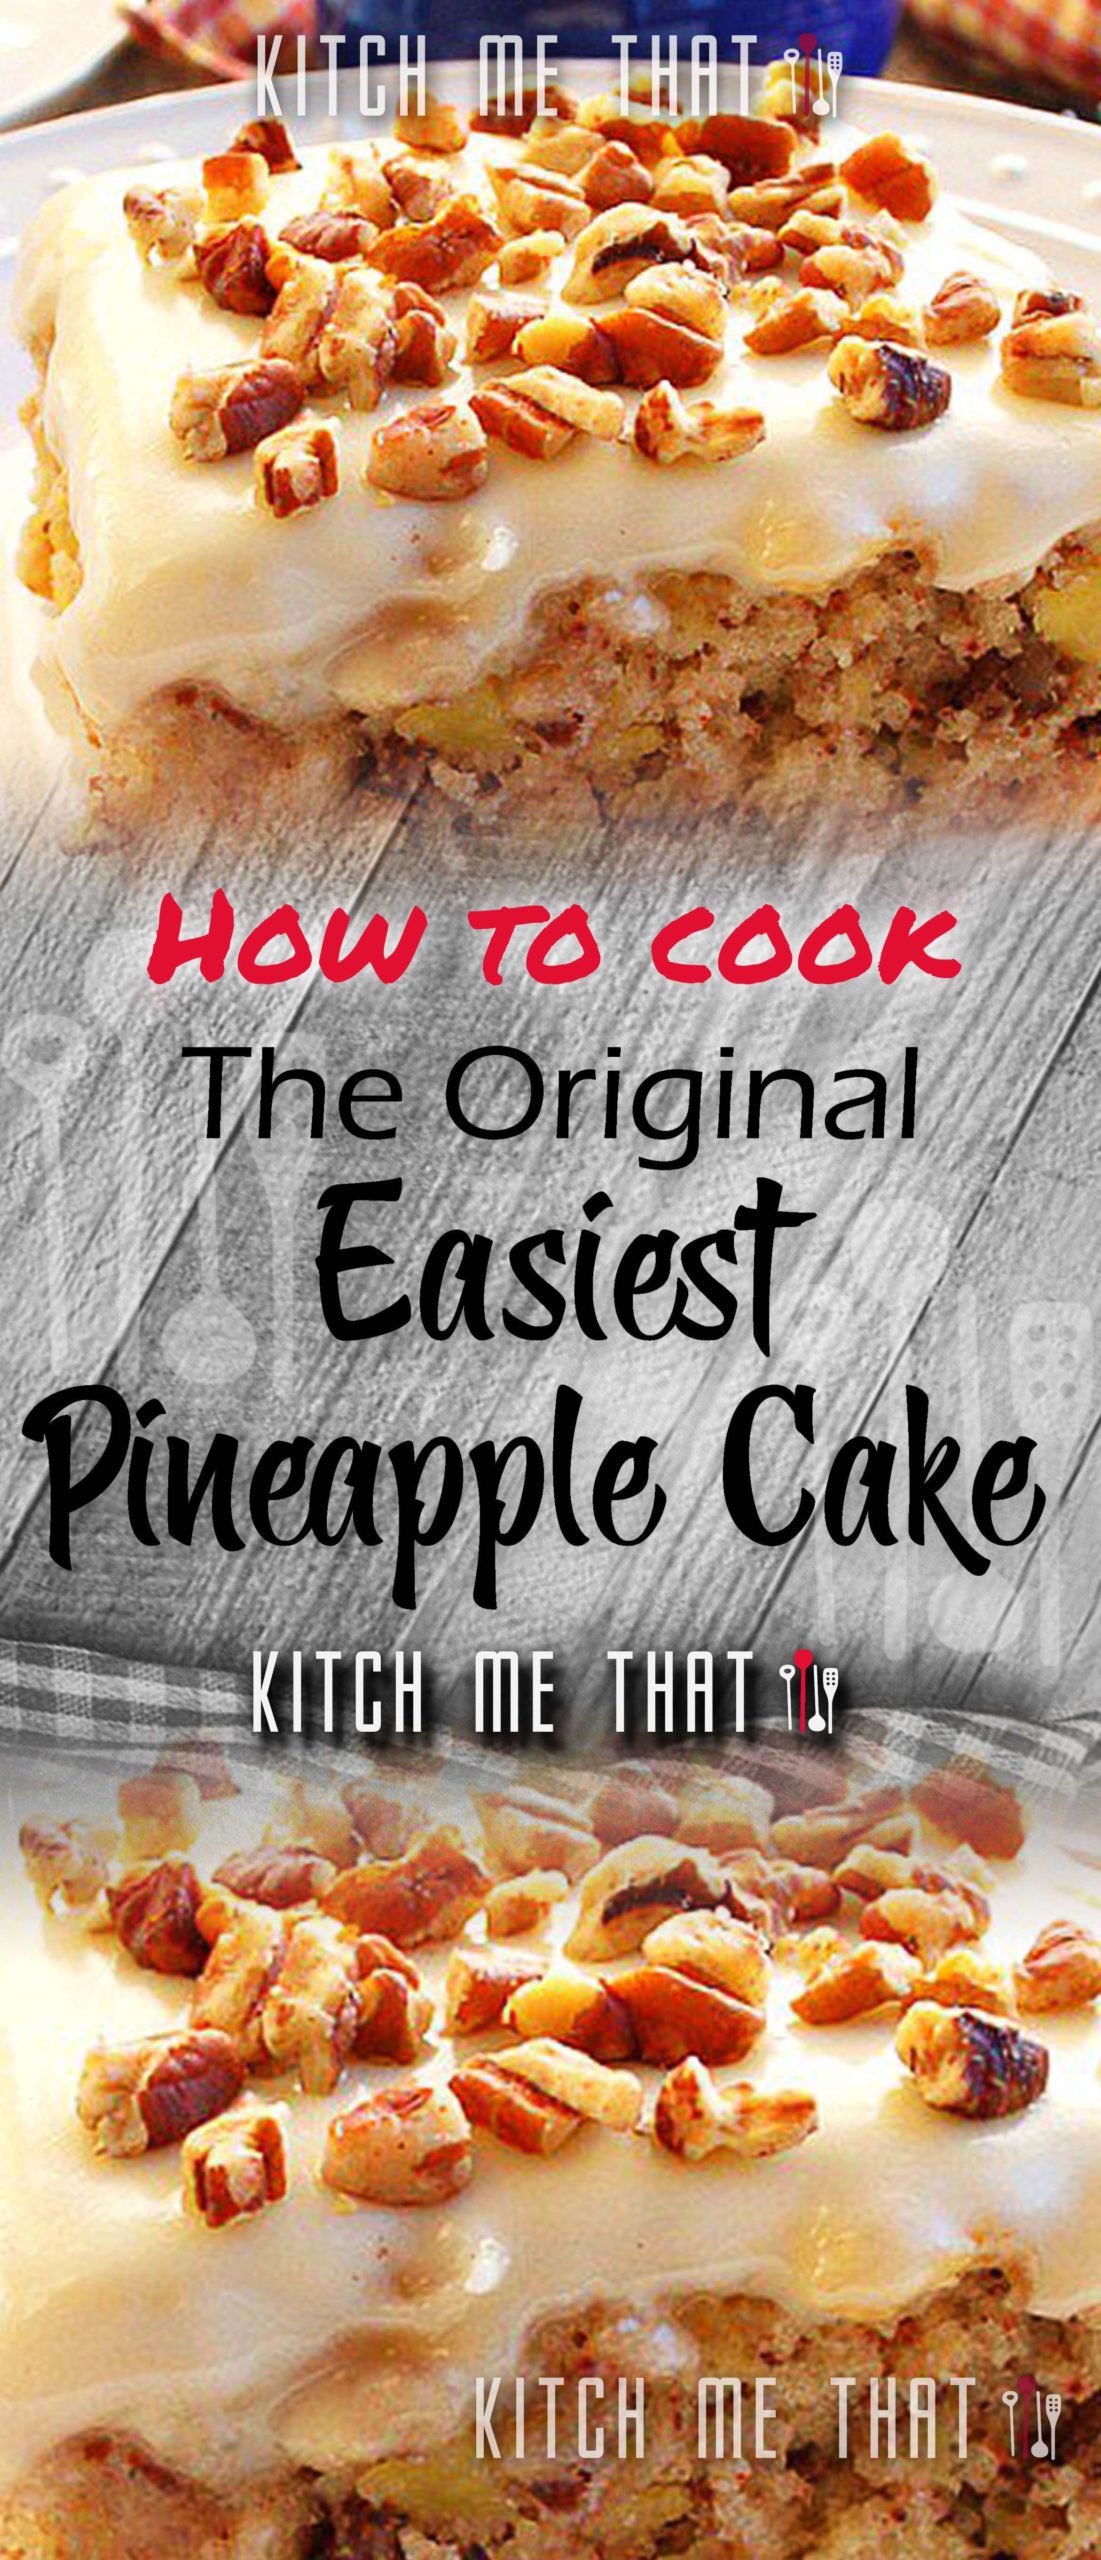 The Original “Easiest Pineapple Cake”